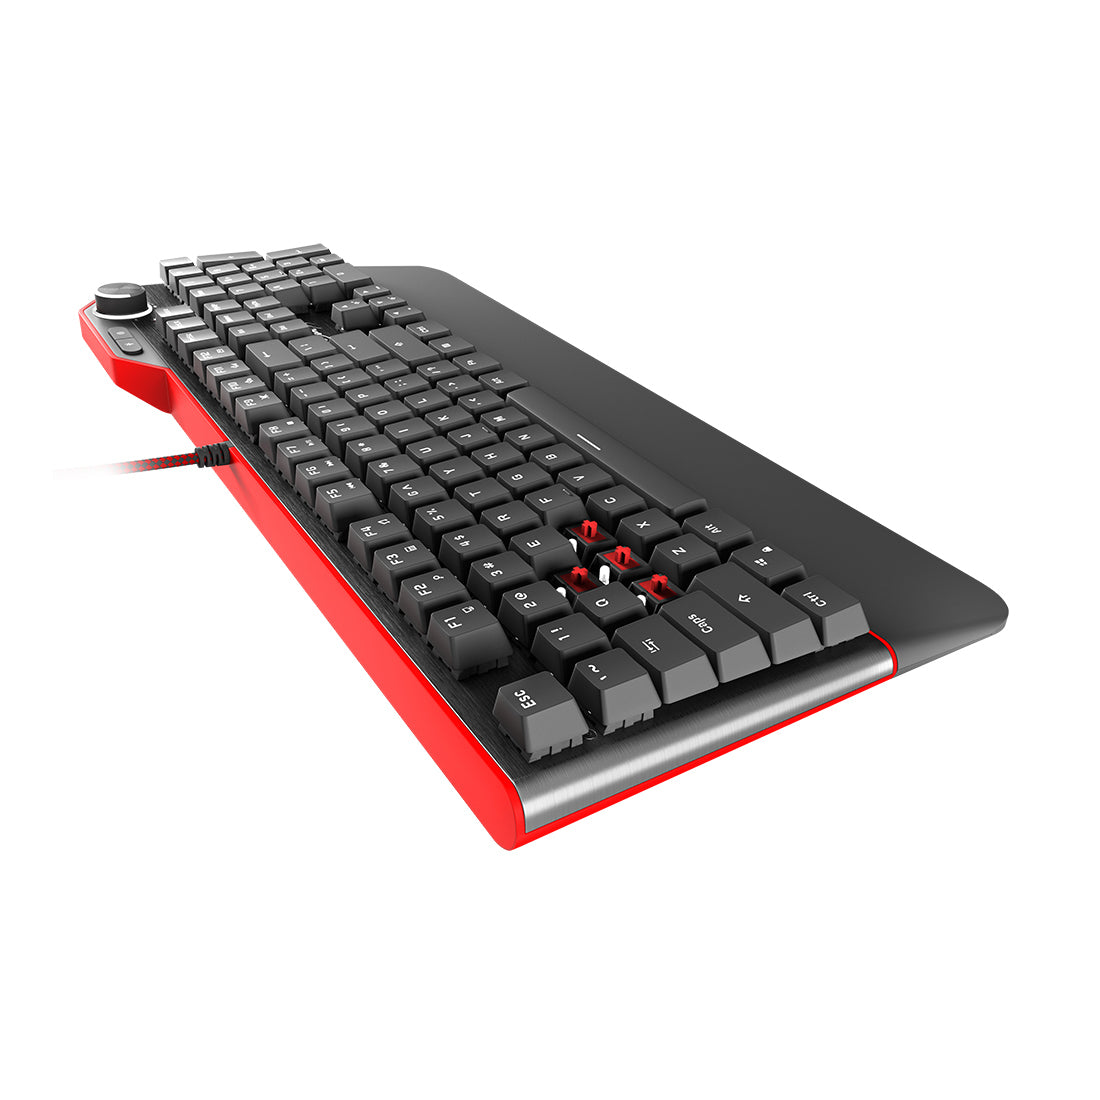 Genesis RX85 NKG-0957 Mechanical Gaming Keyboard (New)